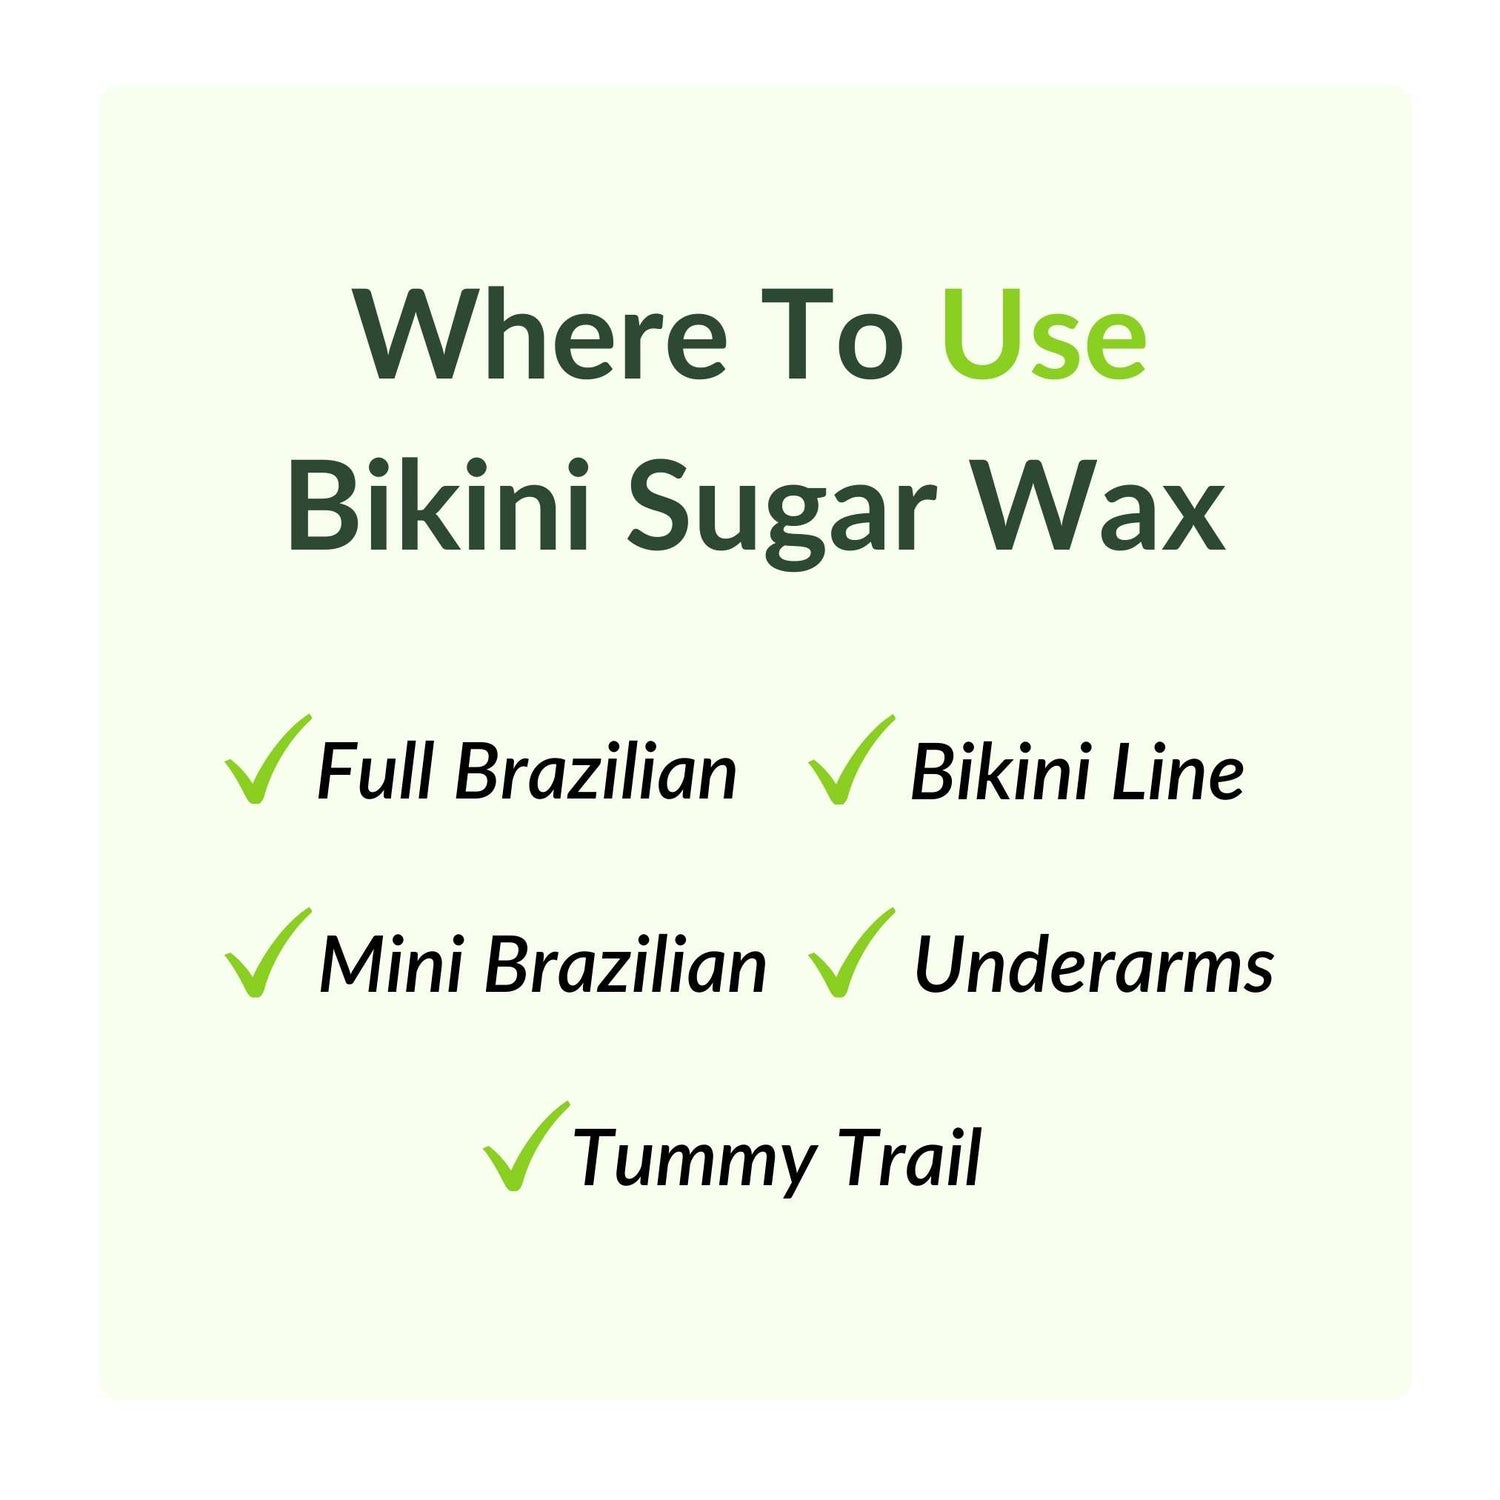 Where to use bikini sugar wax. Bikini Line. Full Brazilian. Mini Brazilian. Tummy trail. Underarms.